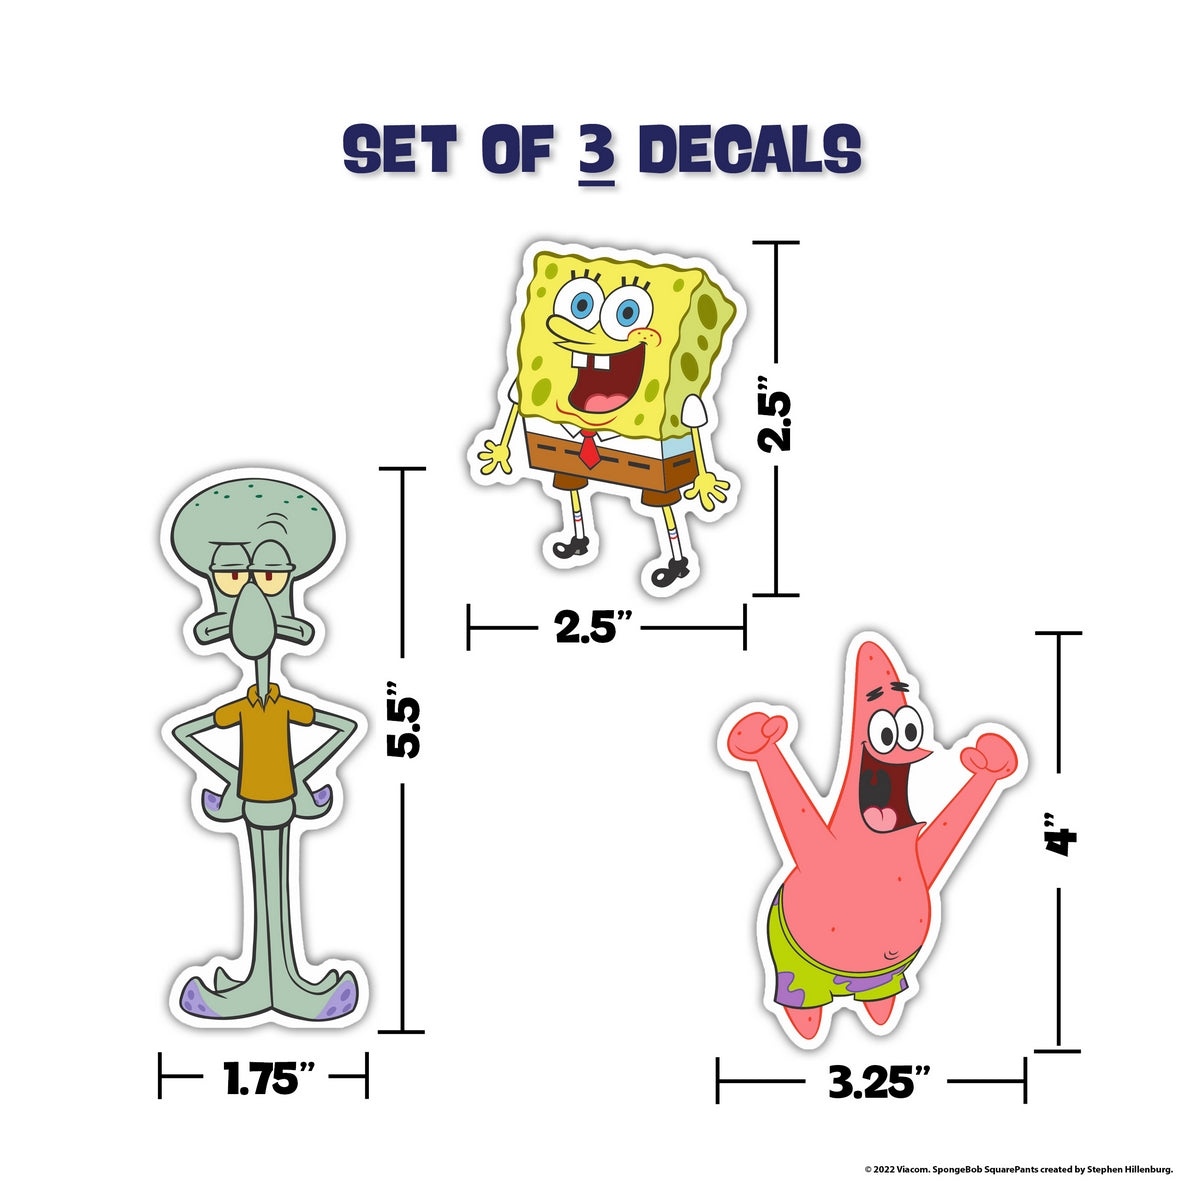 SpongeBob SquarePants and Friends Decals